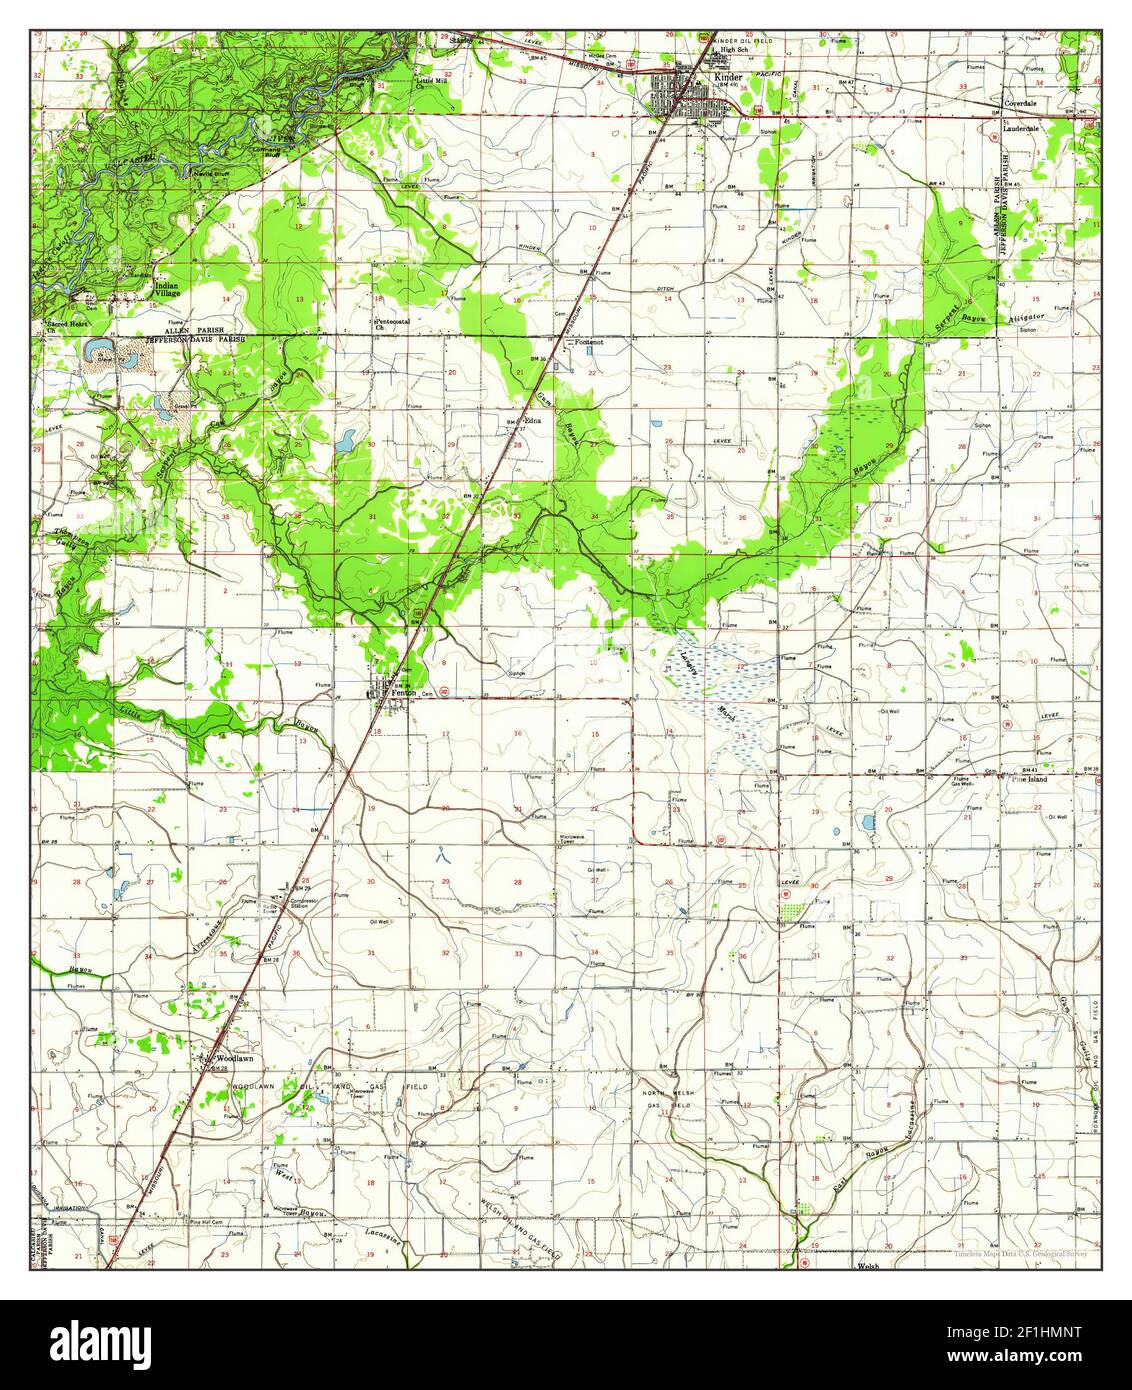 Kinder, Louisiana, map 1959, 1:62500, United States of America by Timeless  Maps, data U.S. Geological Survey Stock Photo - Alamy